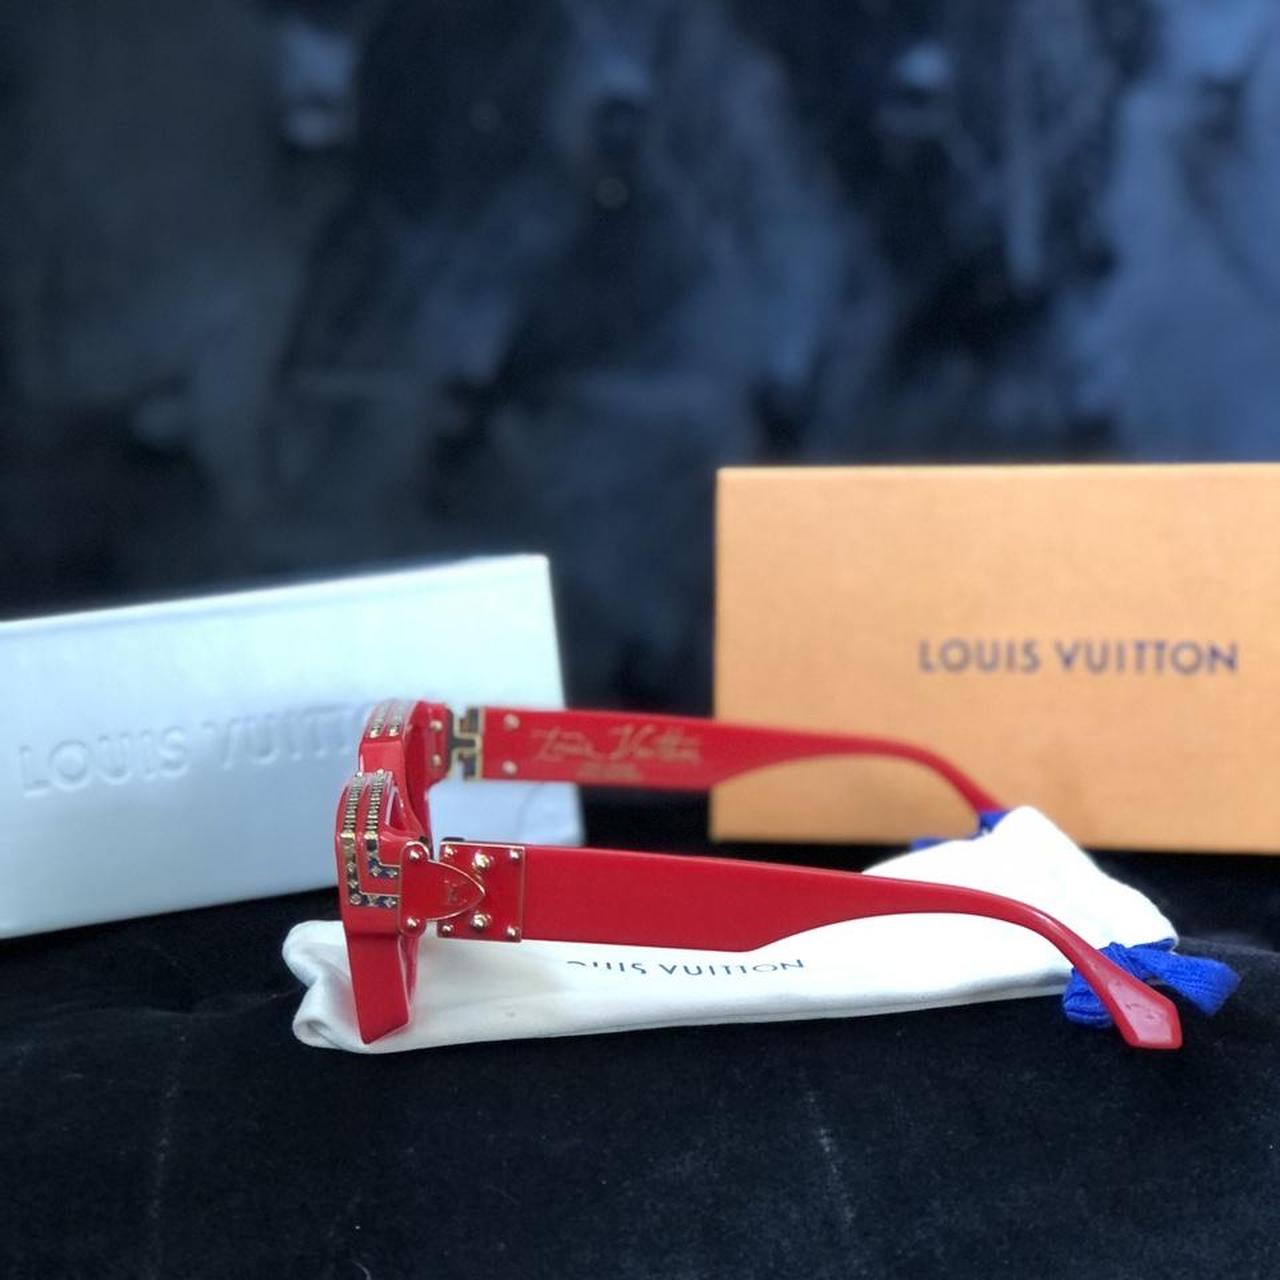 Louis Vuitton Millionaires Sunglasses from Suplook (1:1, TOP